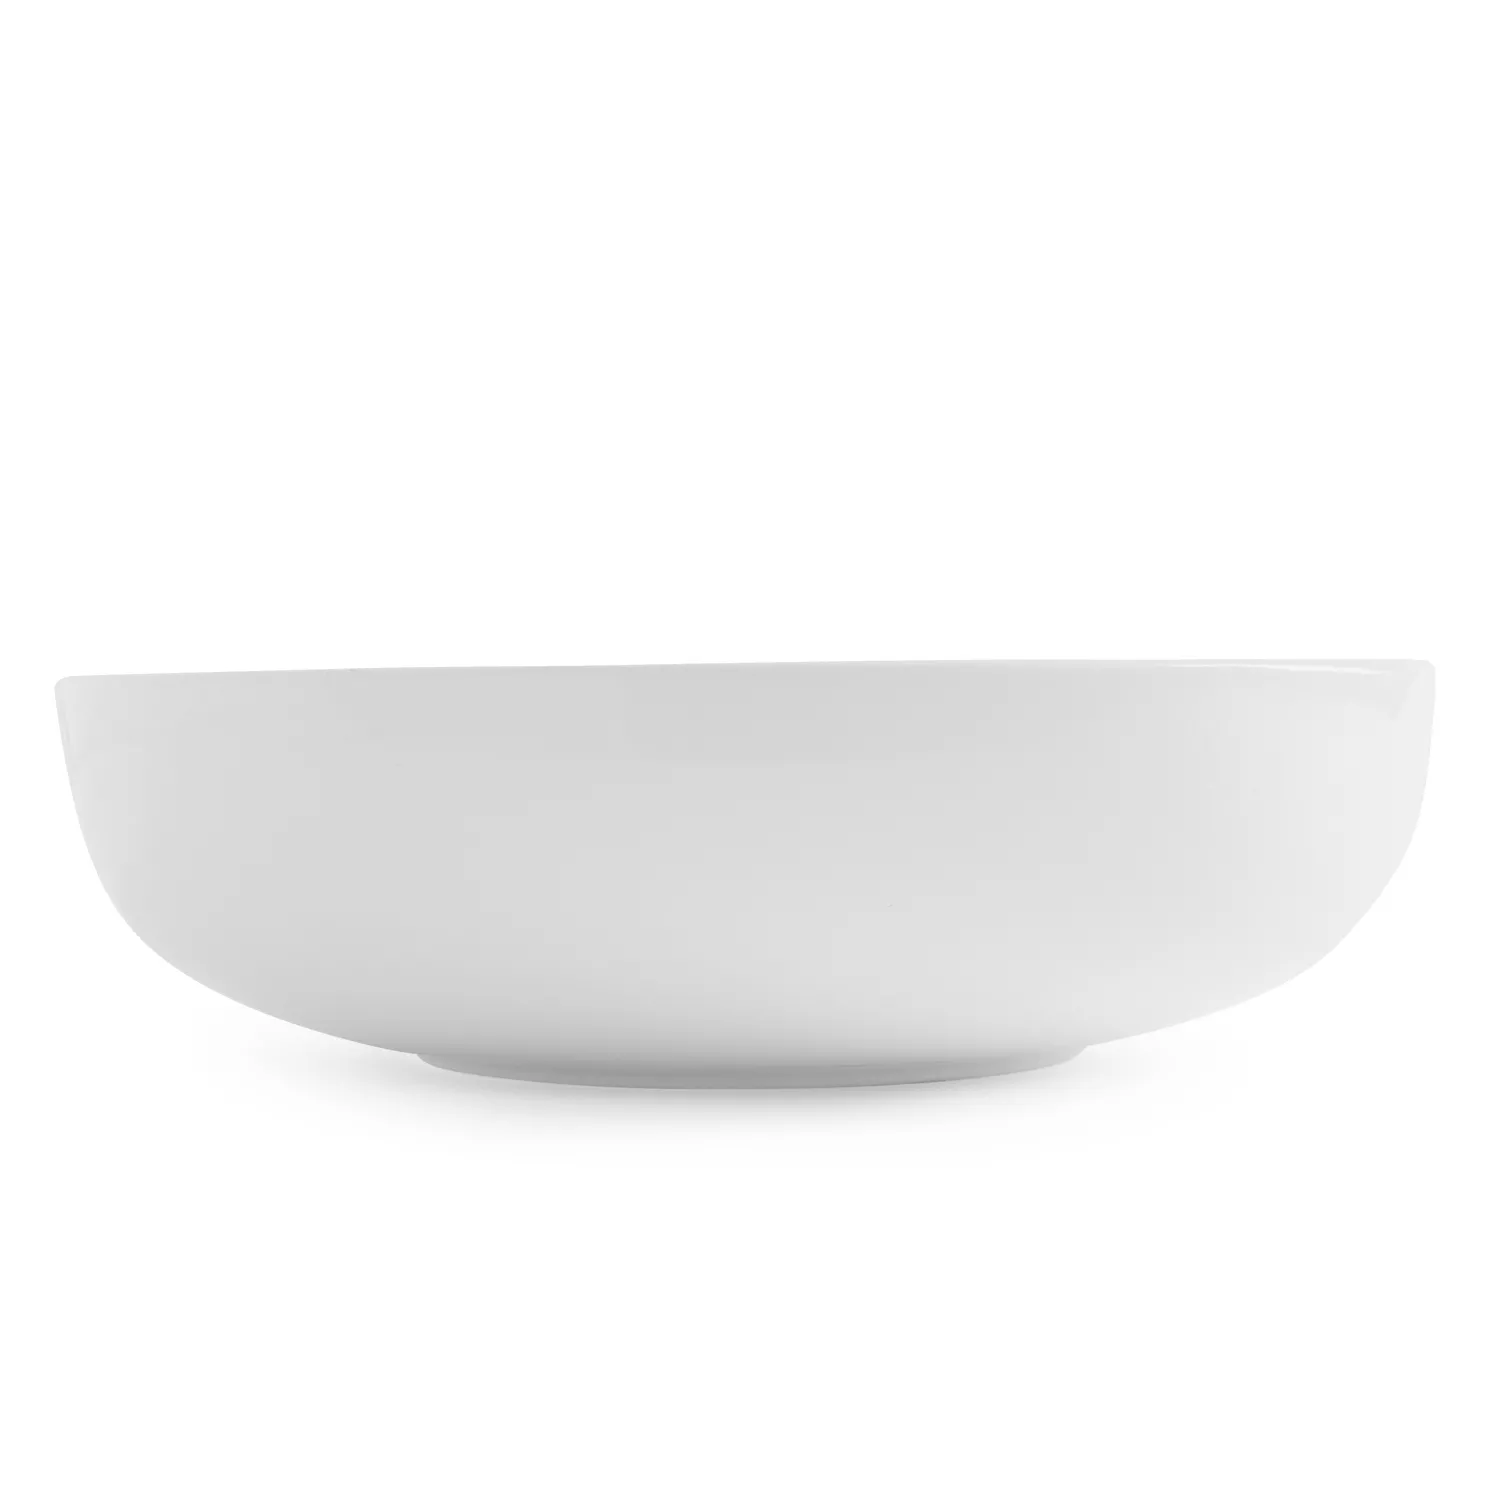 KSP Tavola Porcelain Pasta Bowl - Set of 5 (White)